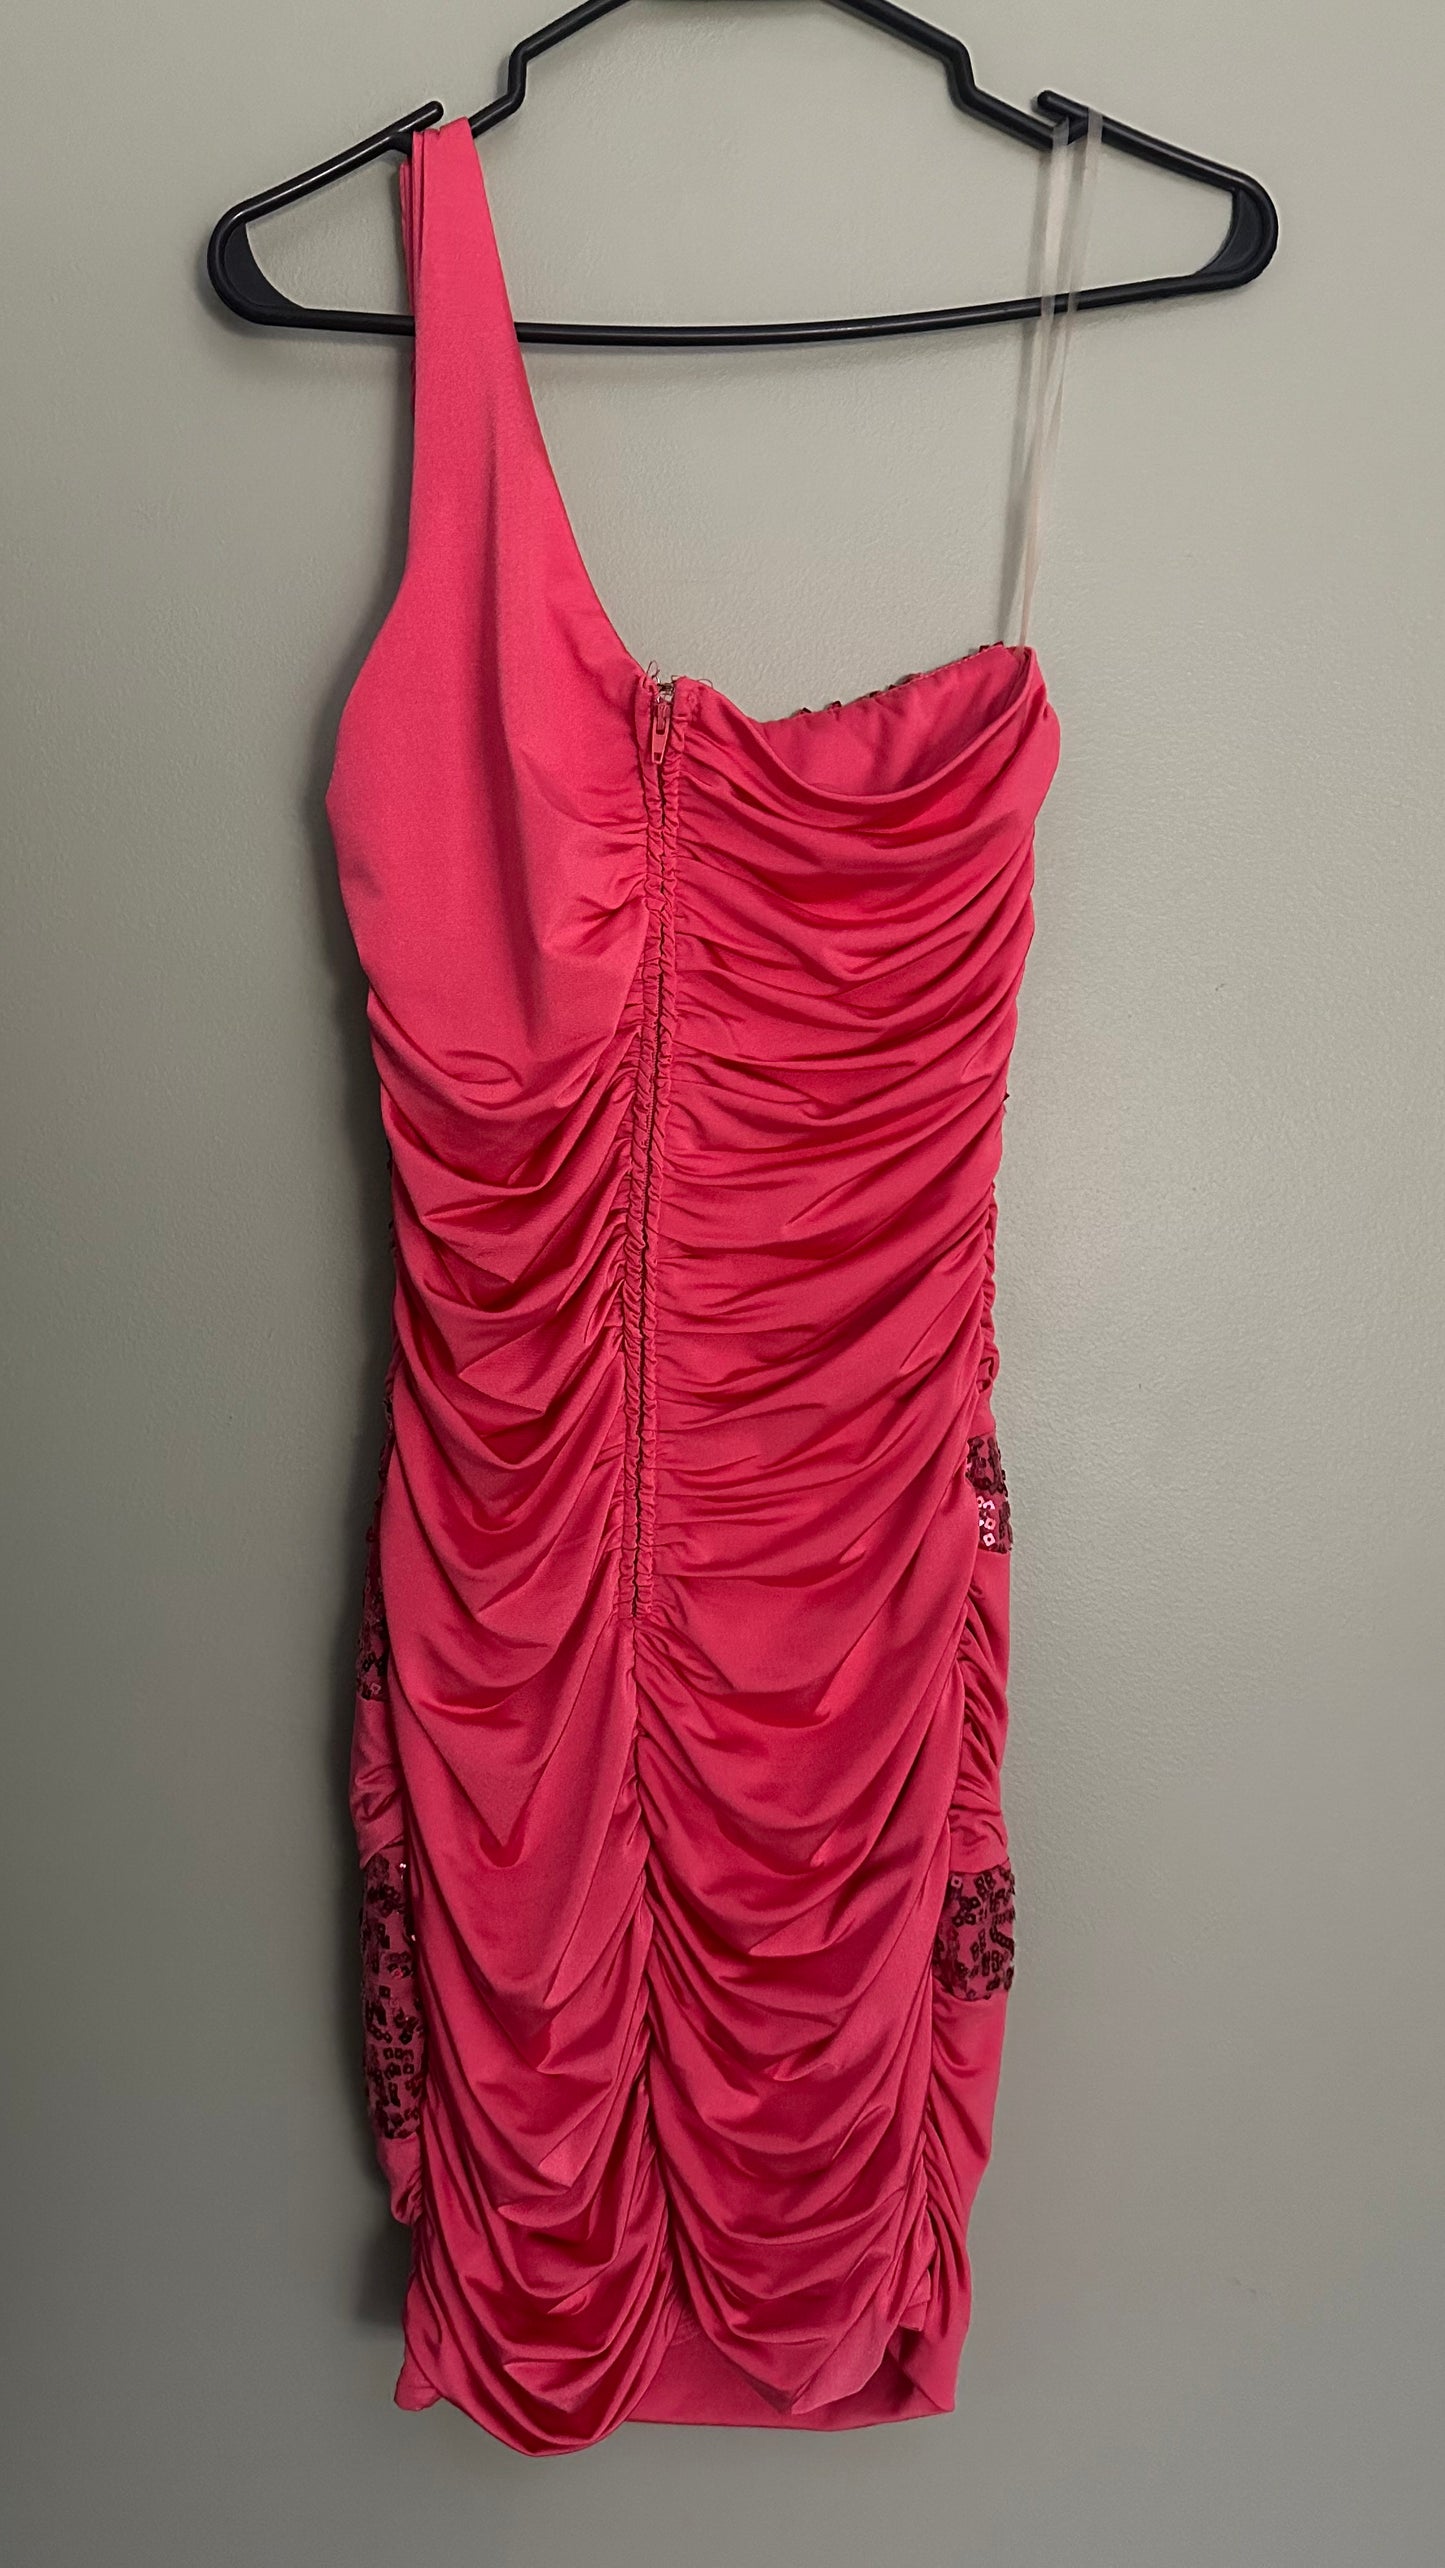 Apricot Colored Semi-Formal Dress, Size M